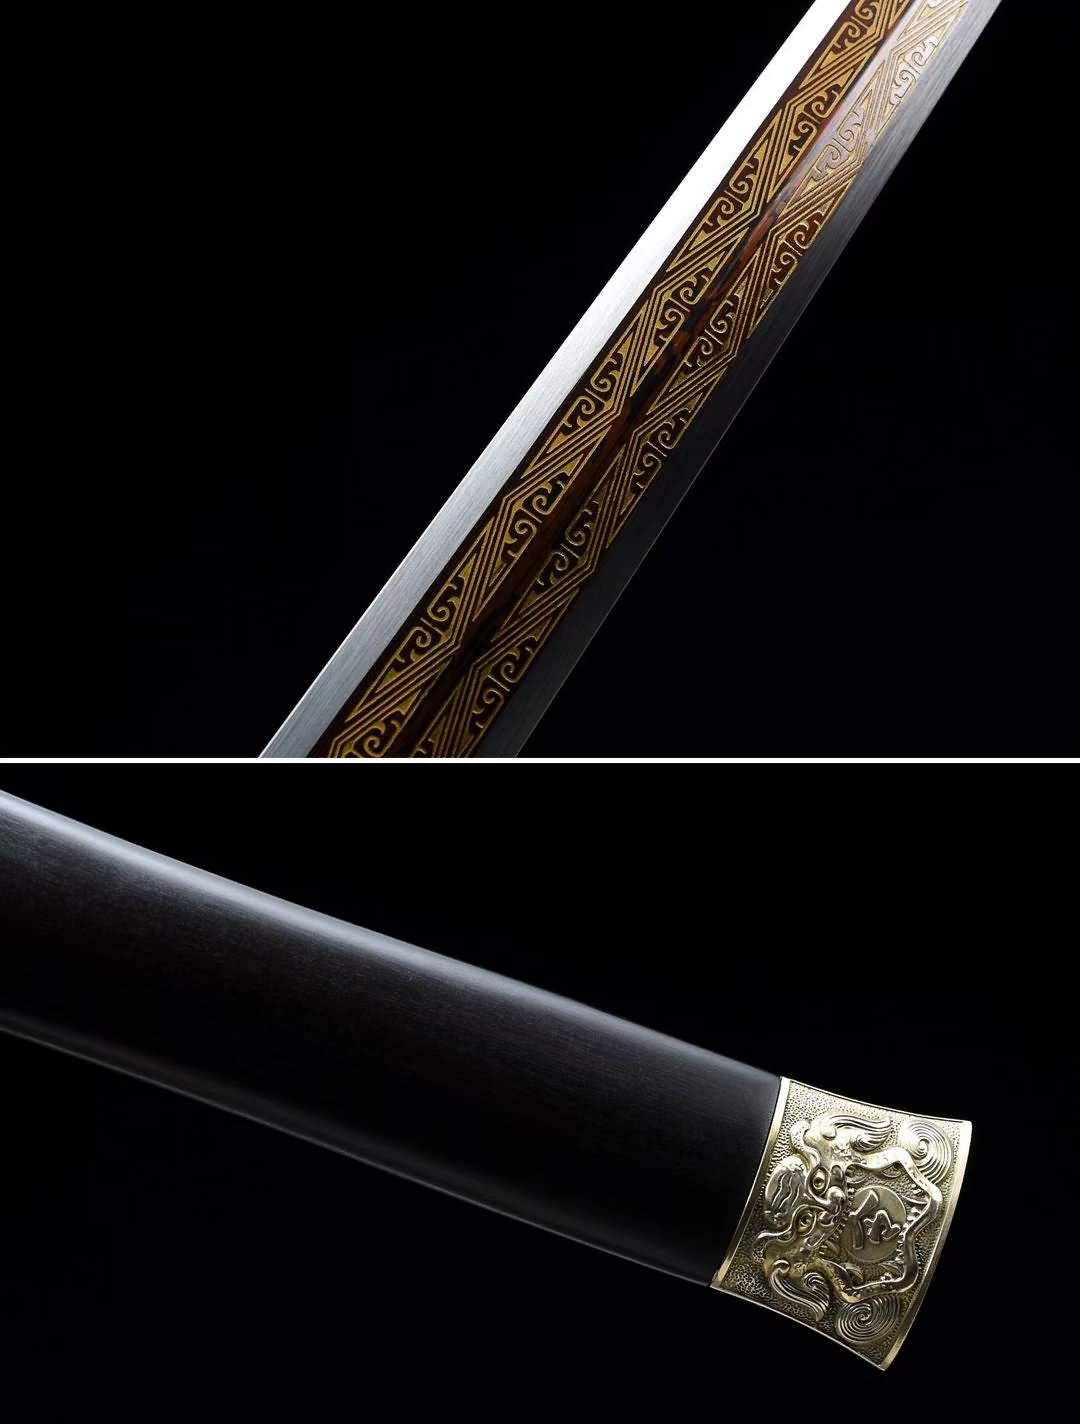 Dragon Han jian Sword(Forged Damascus balde,Brass Fittings) Real Swords,Chinese Sword…